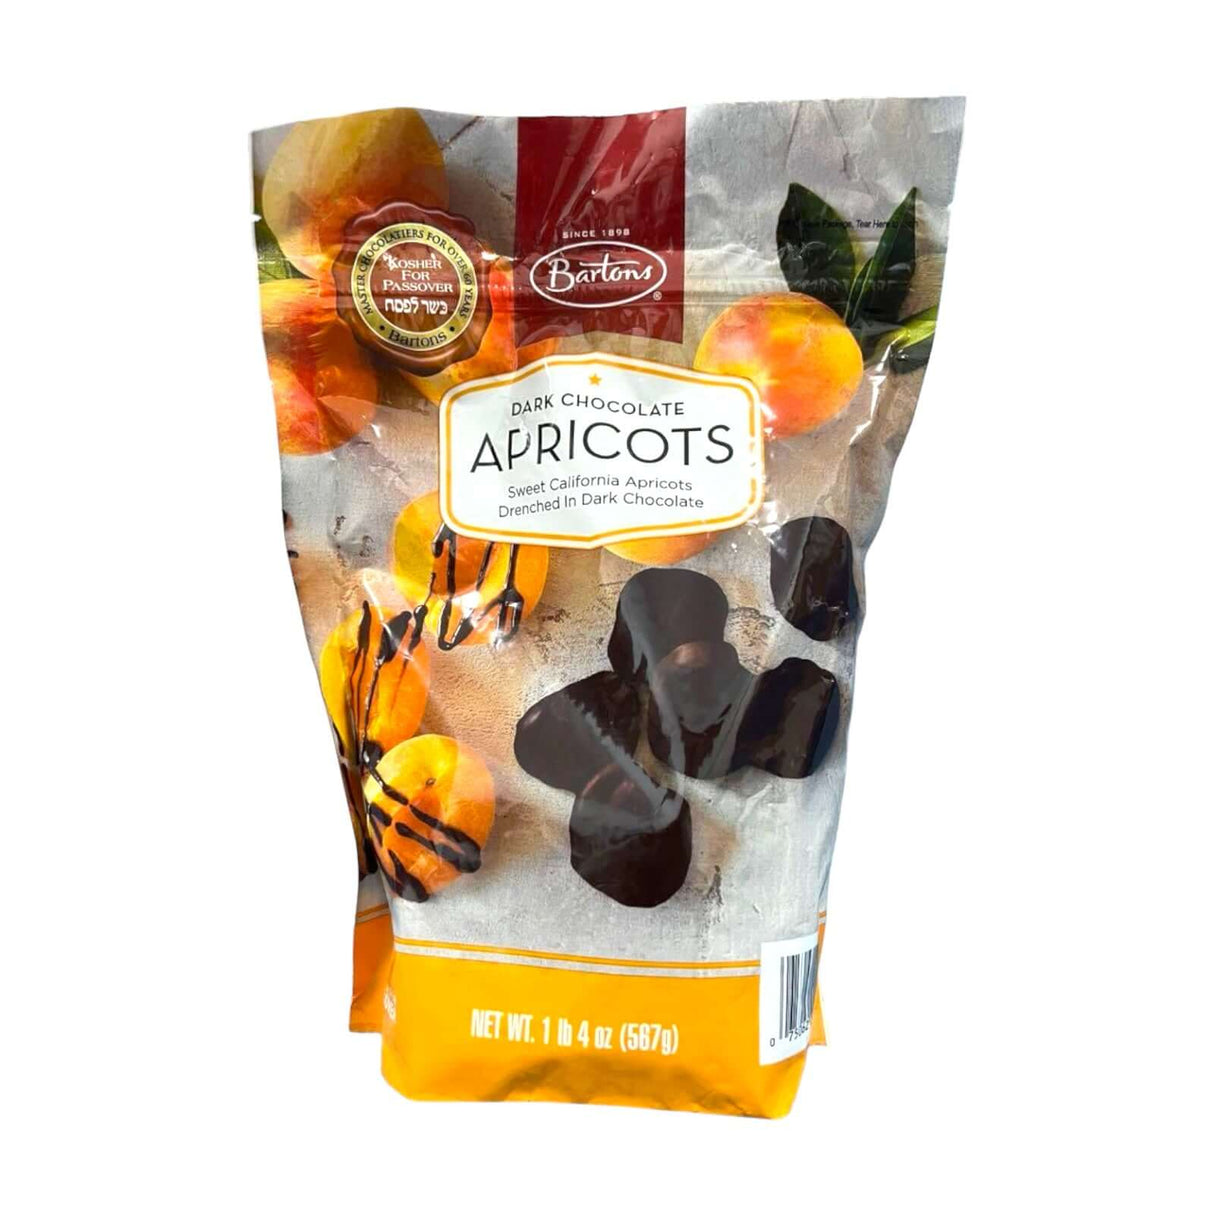 Barton's Dark Chocolate Apricots